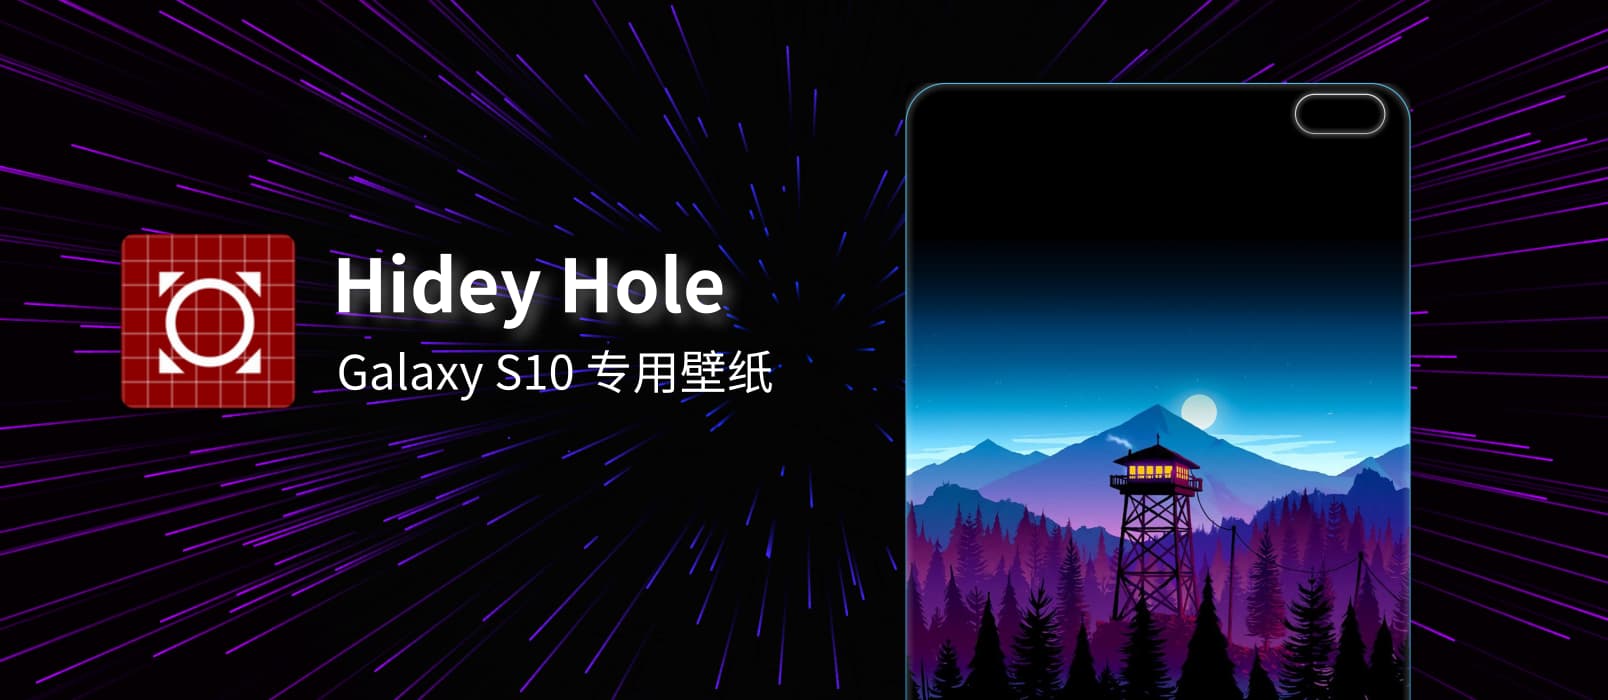 Hidey Hole - Galaxy S10 专用壁纸集，主要用于遮挡相机（隐藏孔洞） 1